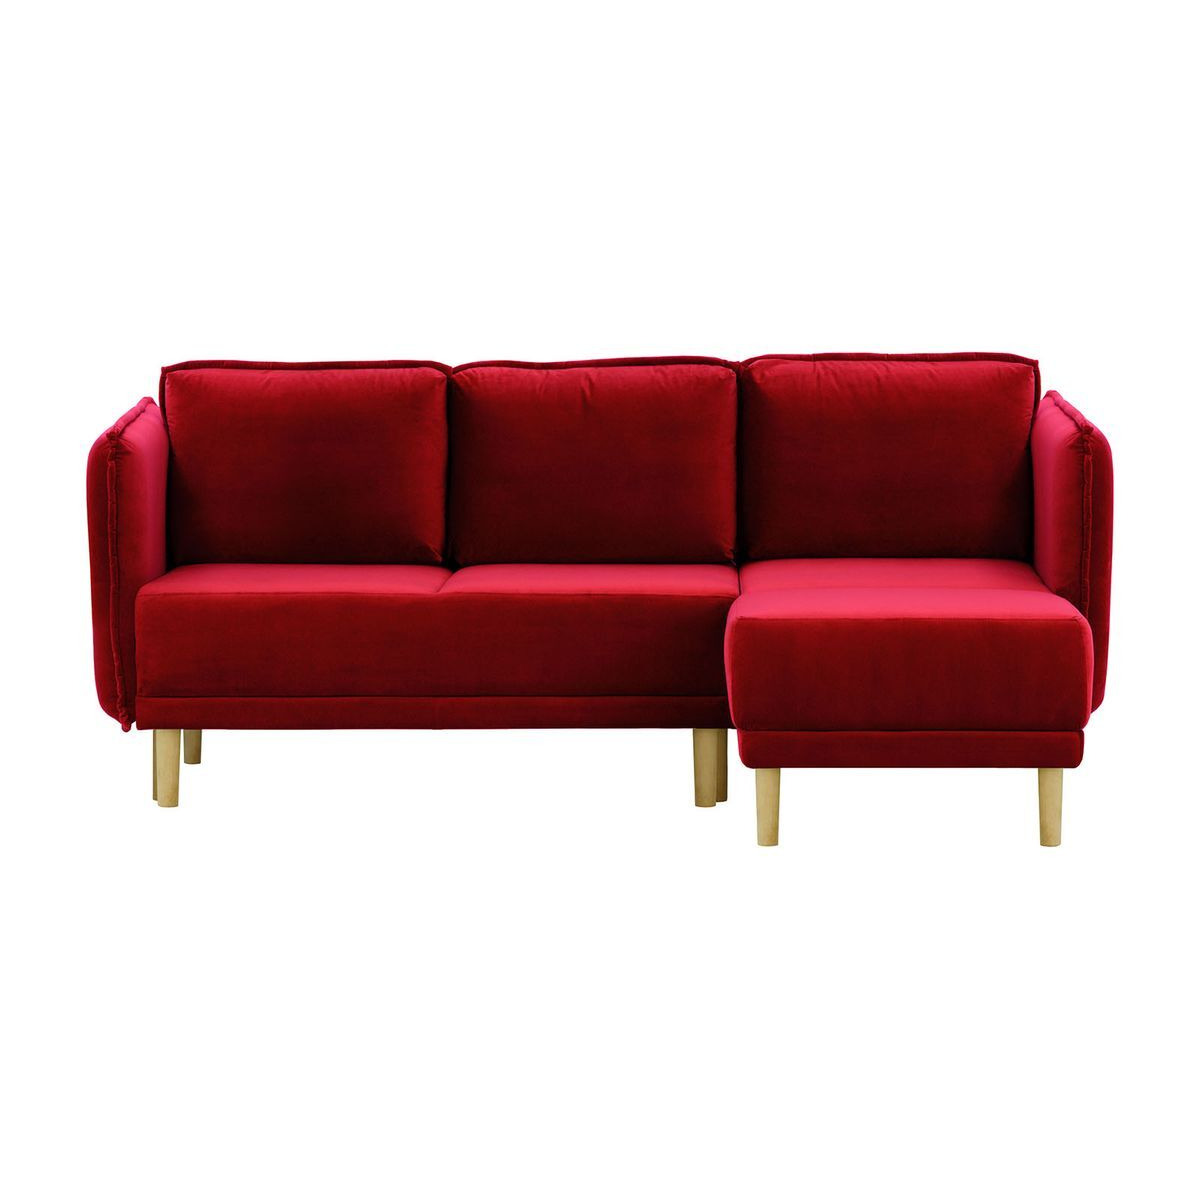 Swift Corner Sofa Bed, dark red - image 1